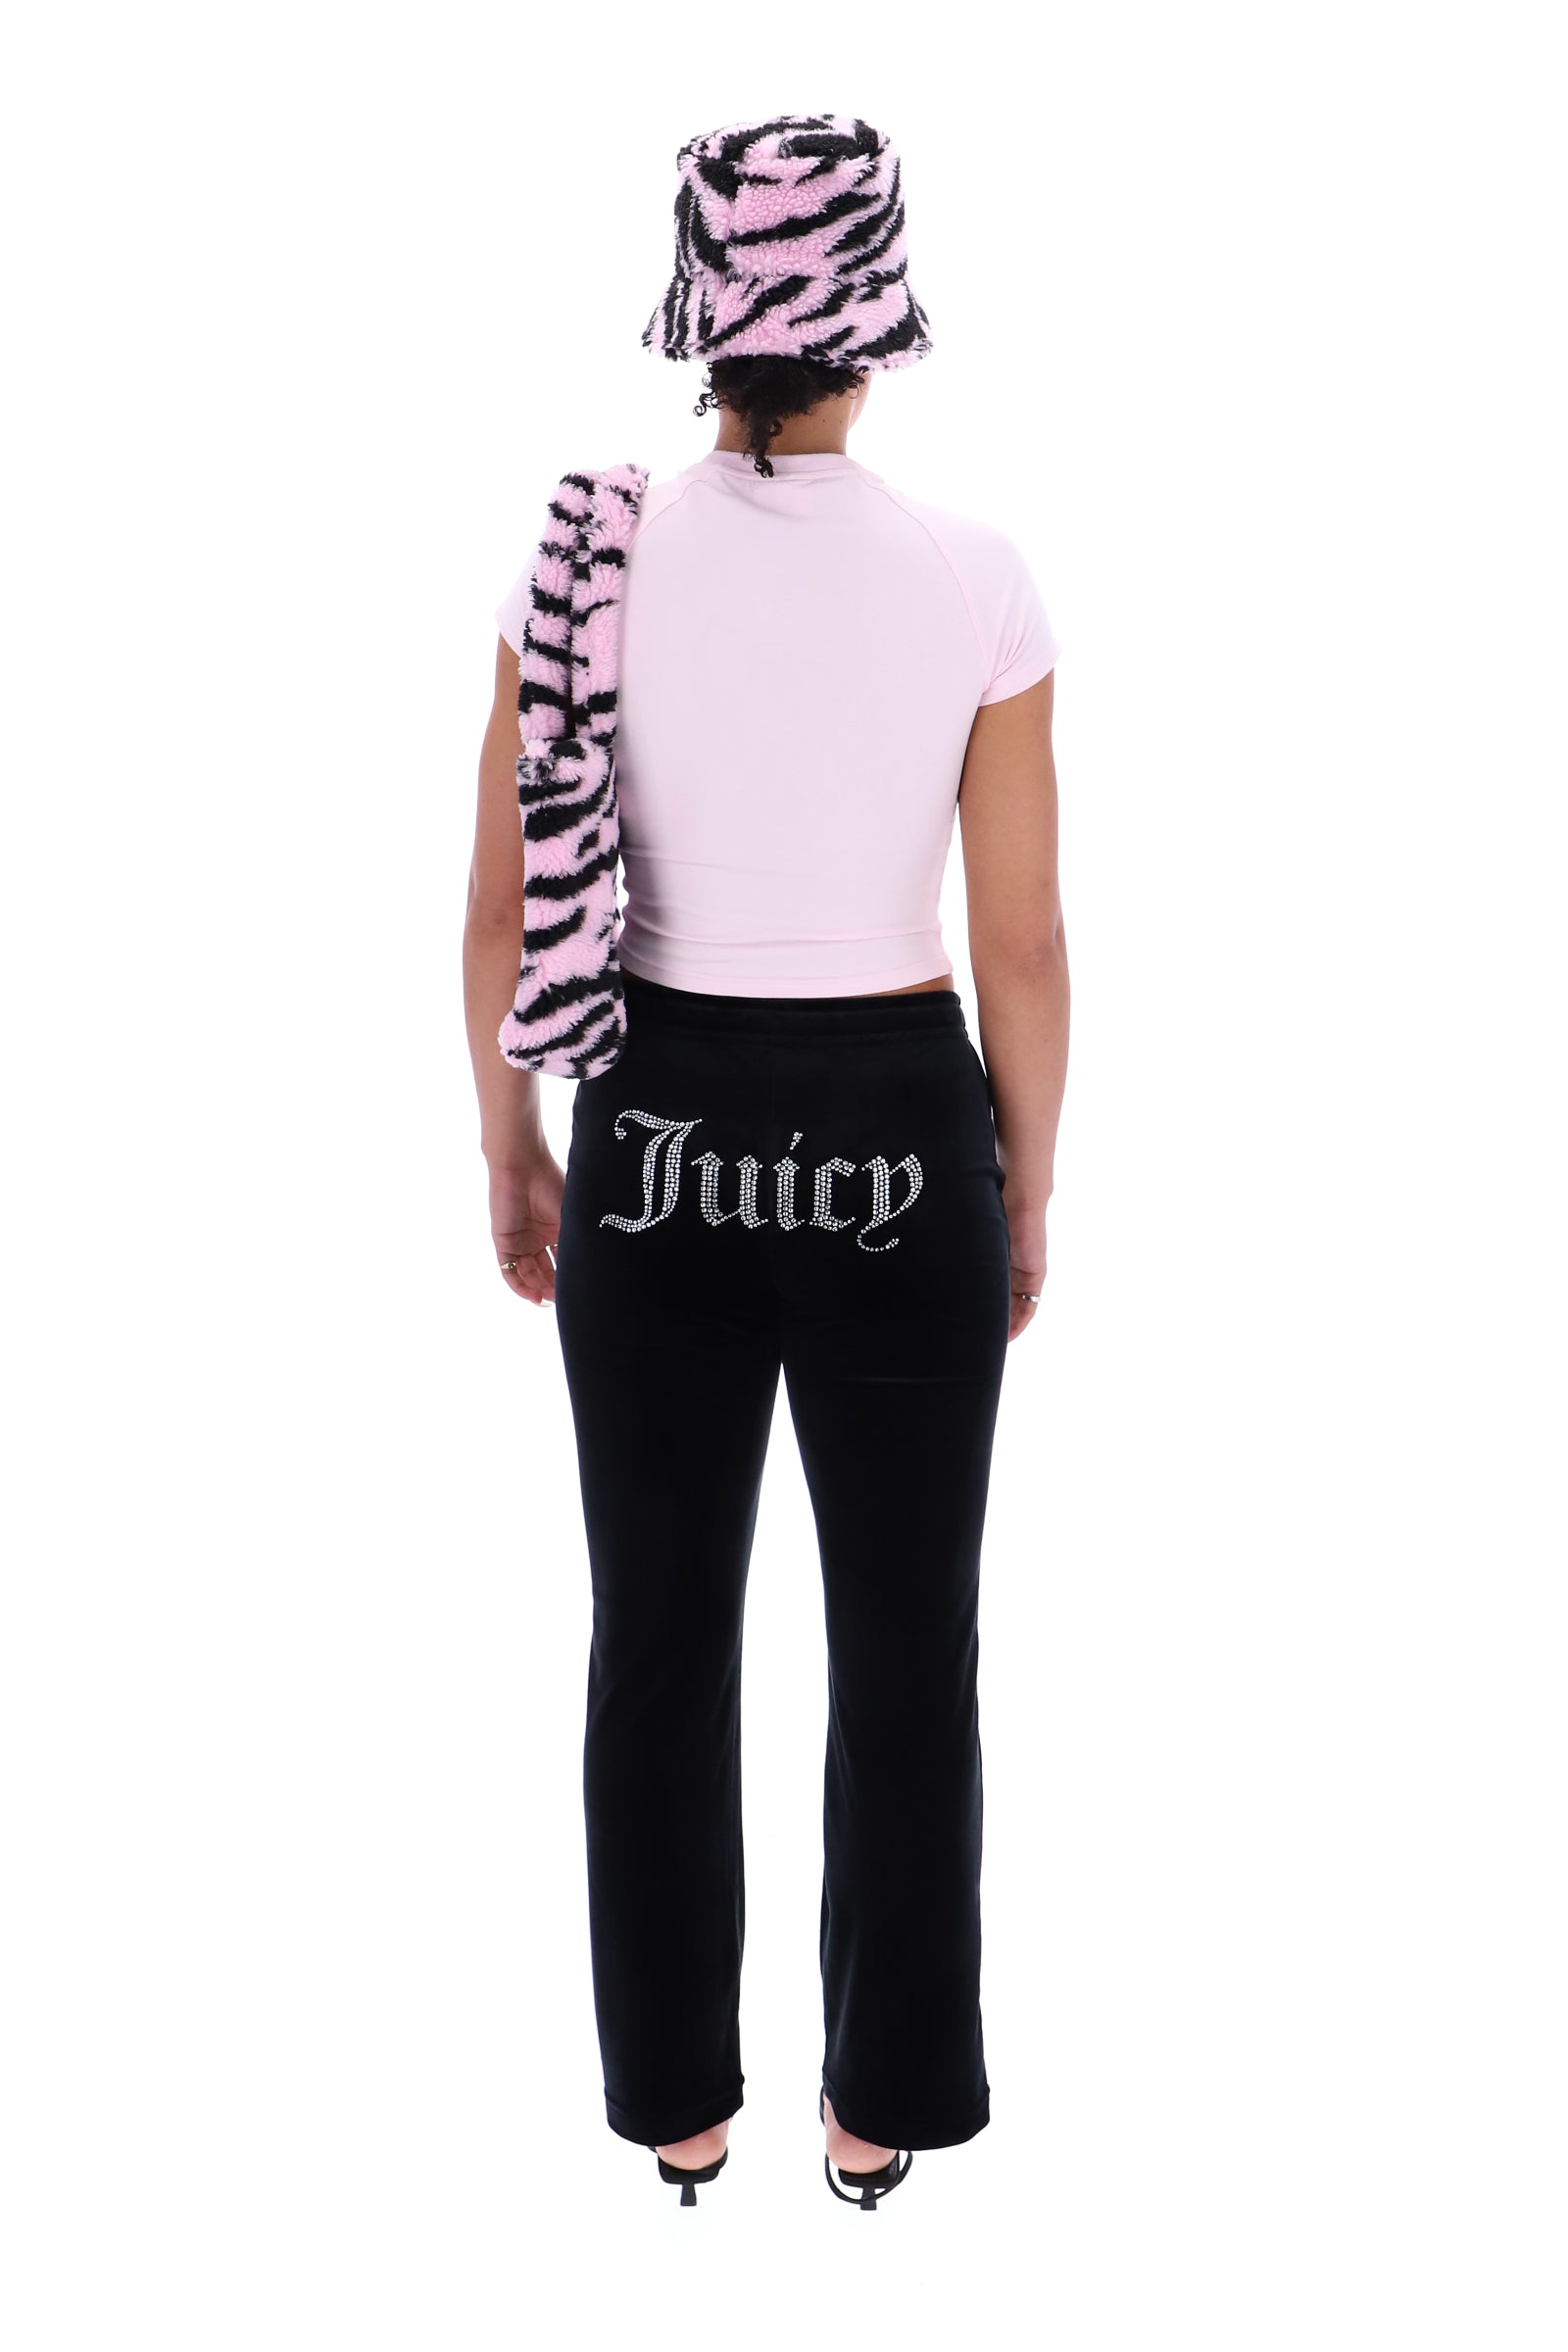 Juicy Couture Pantaloni Donna VIJH70196 BLACK